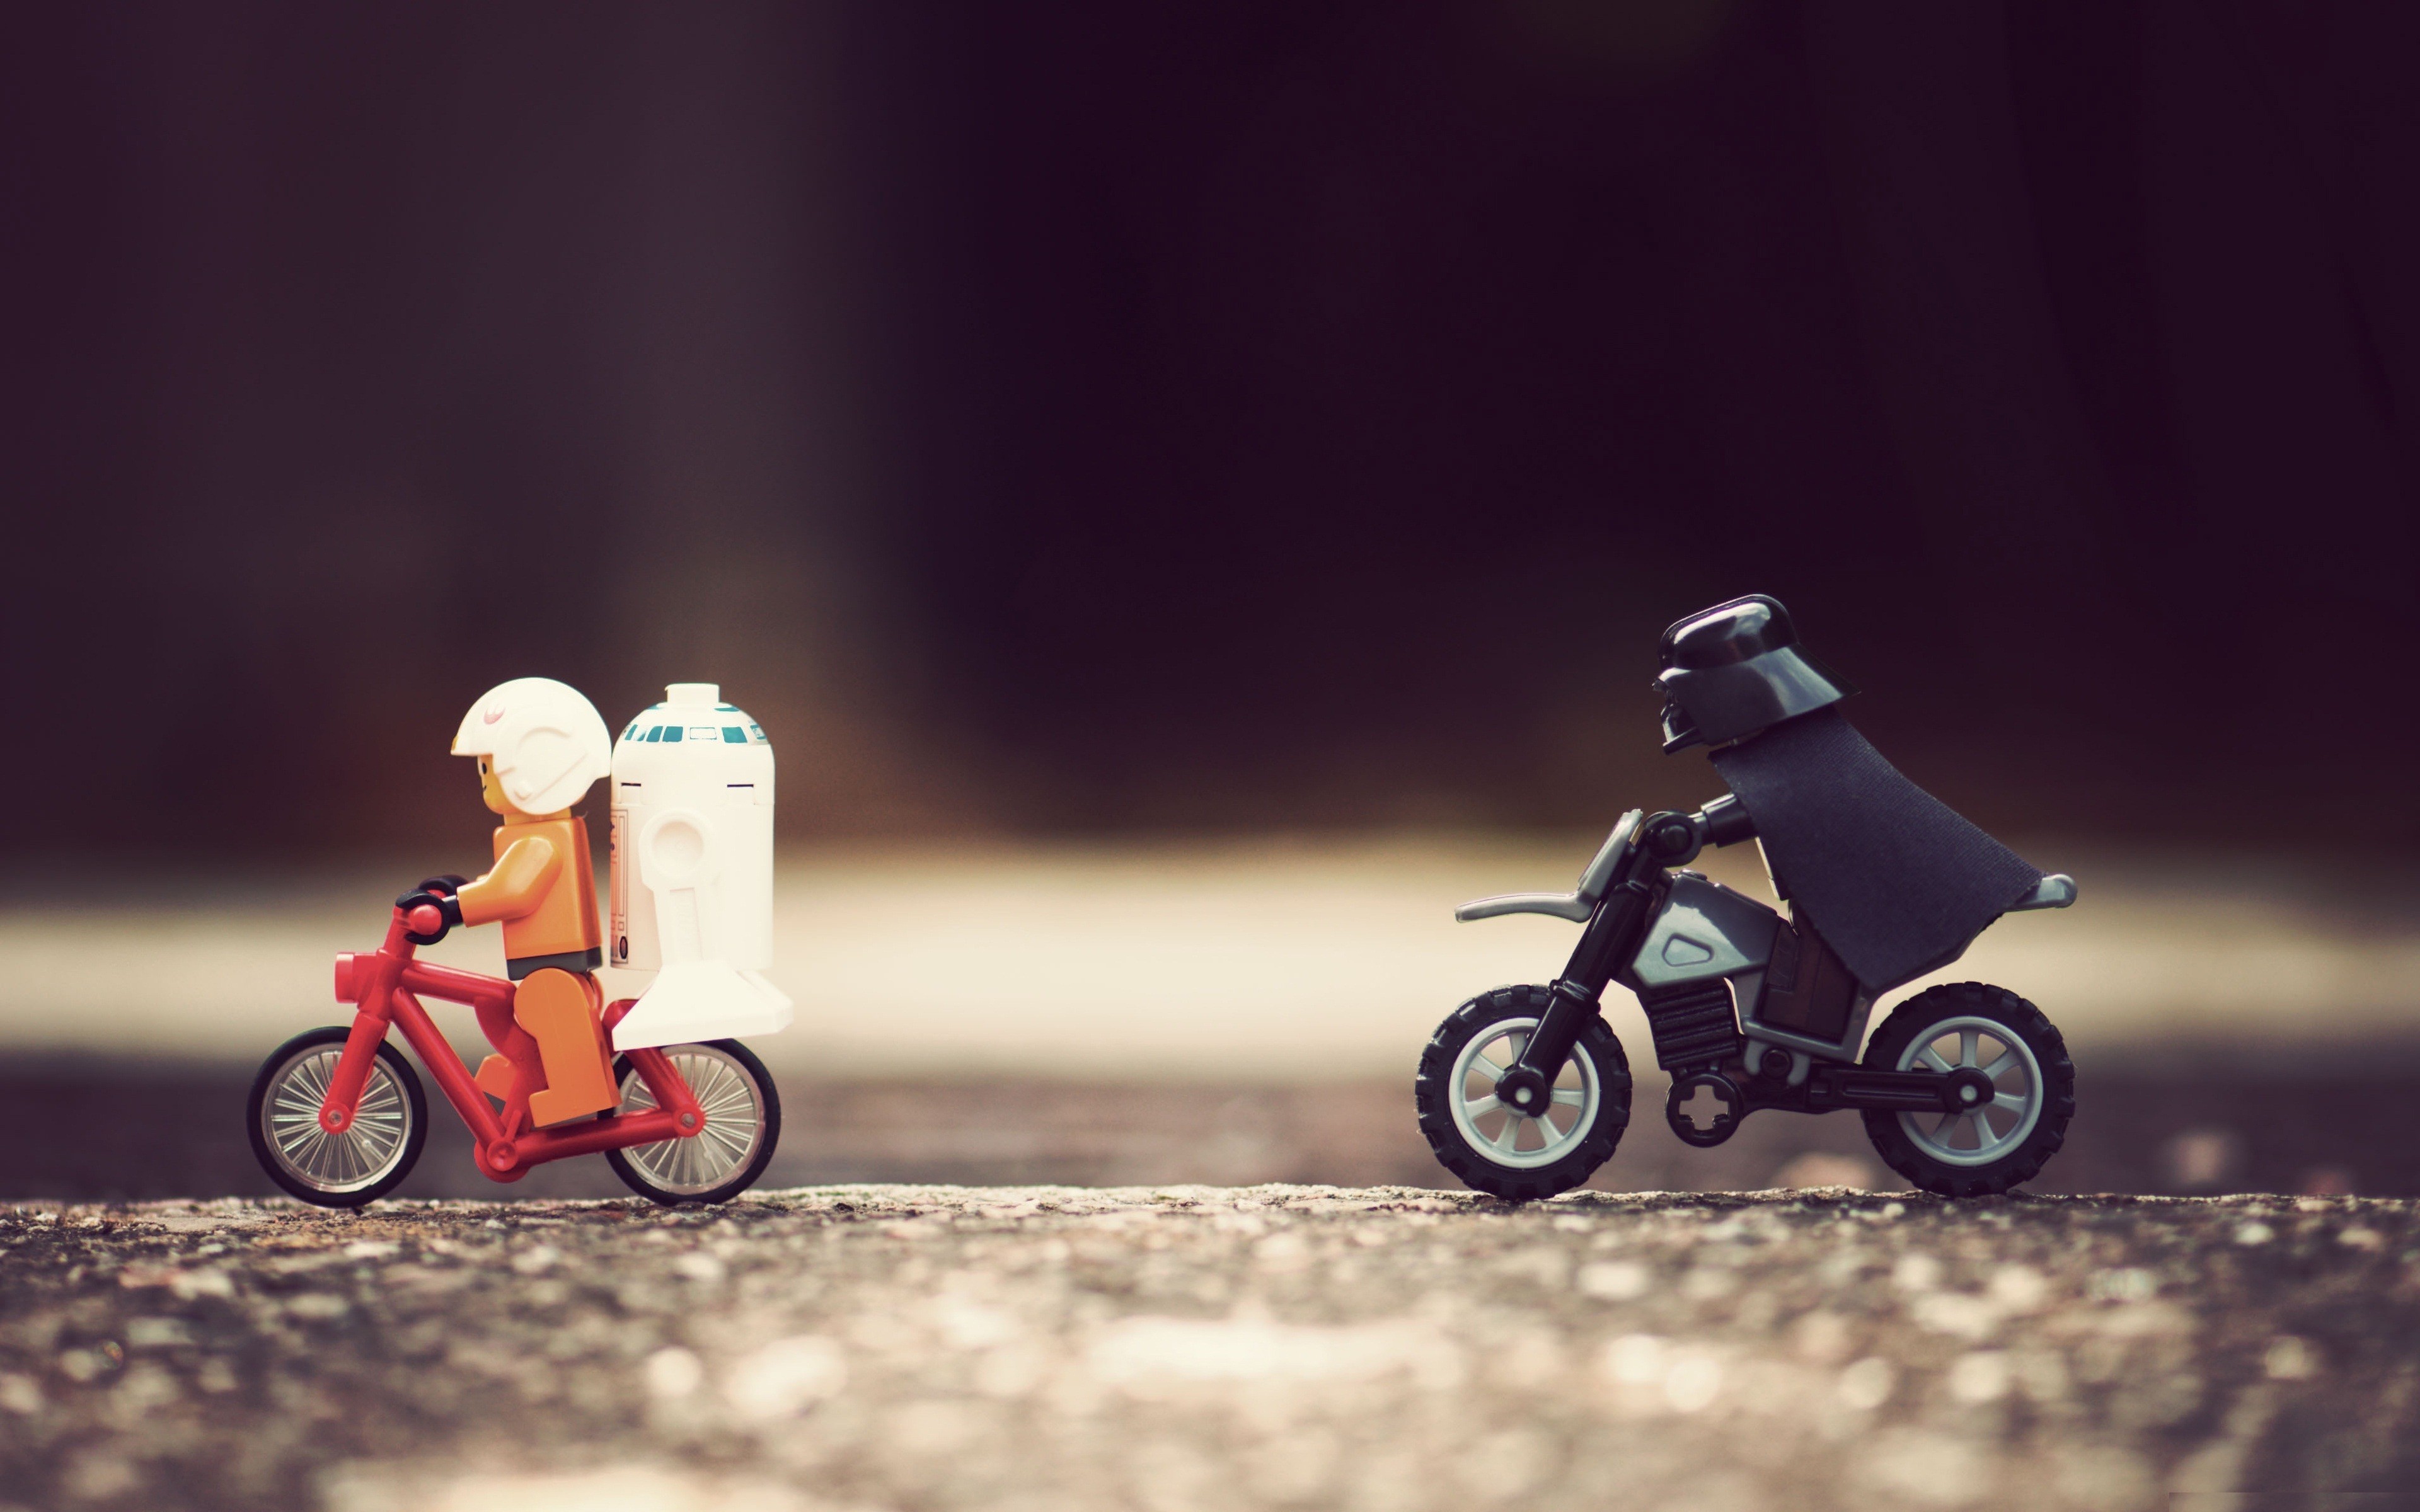 General 3840x2400 Star Wars LEGO science fiction movies Darth Vader Luke Skywalker toys humor Star Wars Humor R2-D2 Sith Star Wars Droids figurines